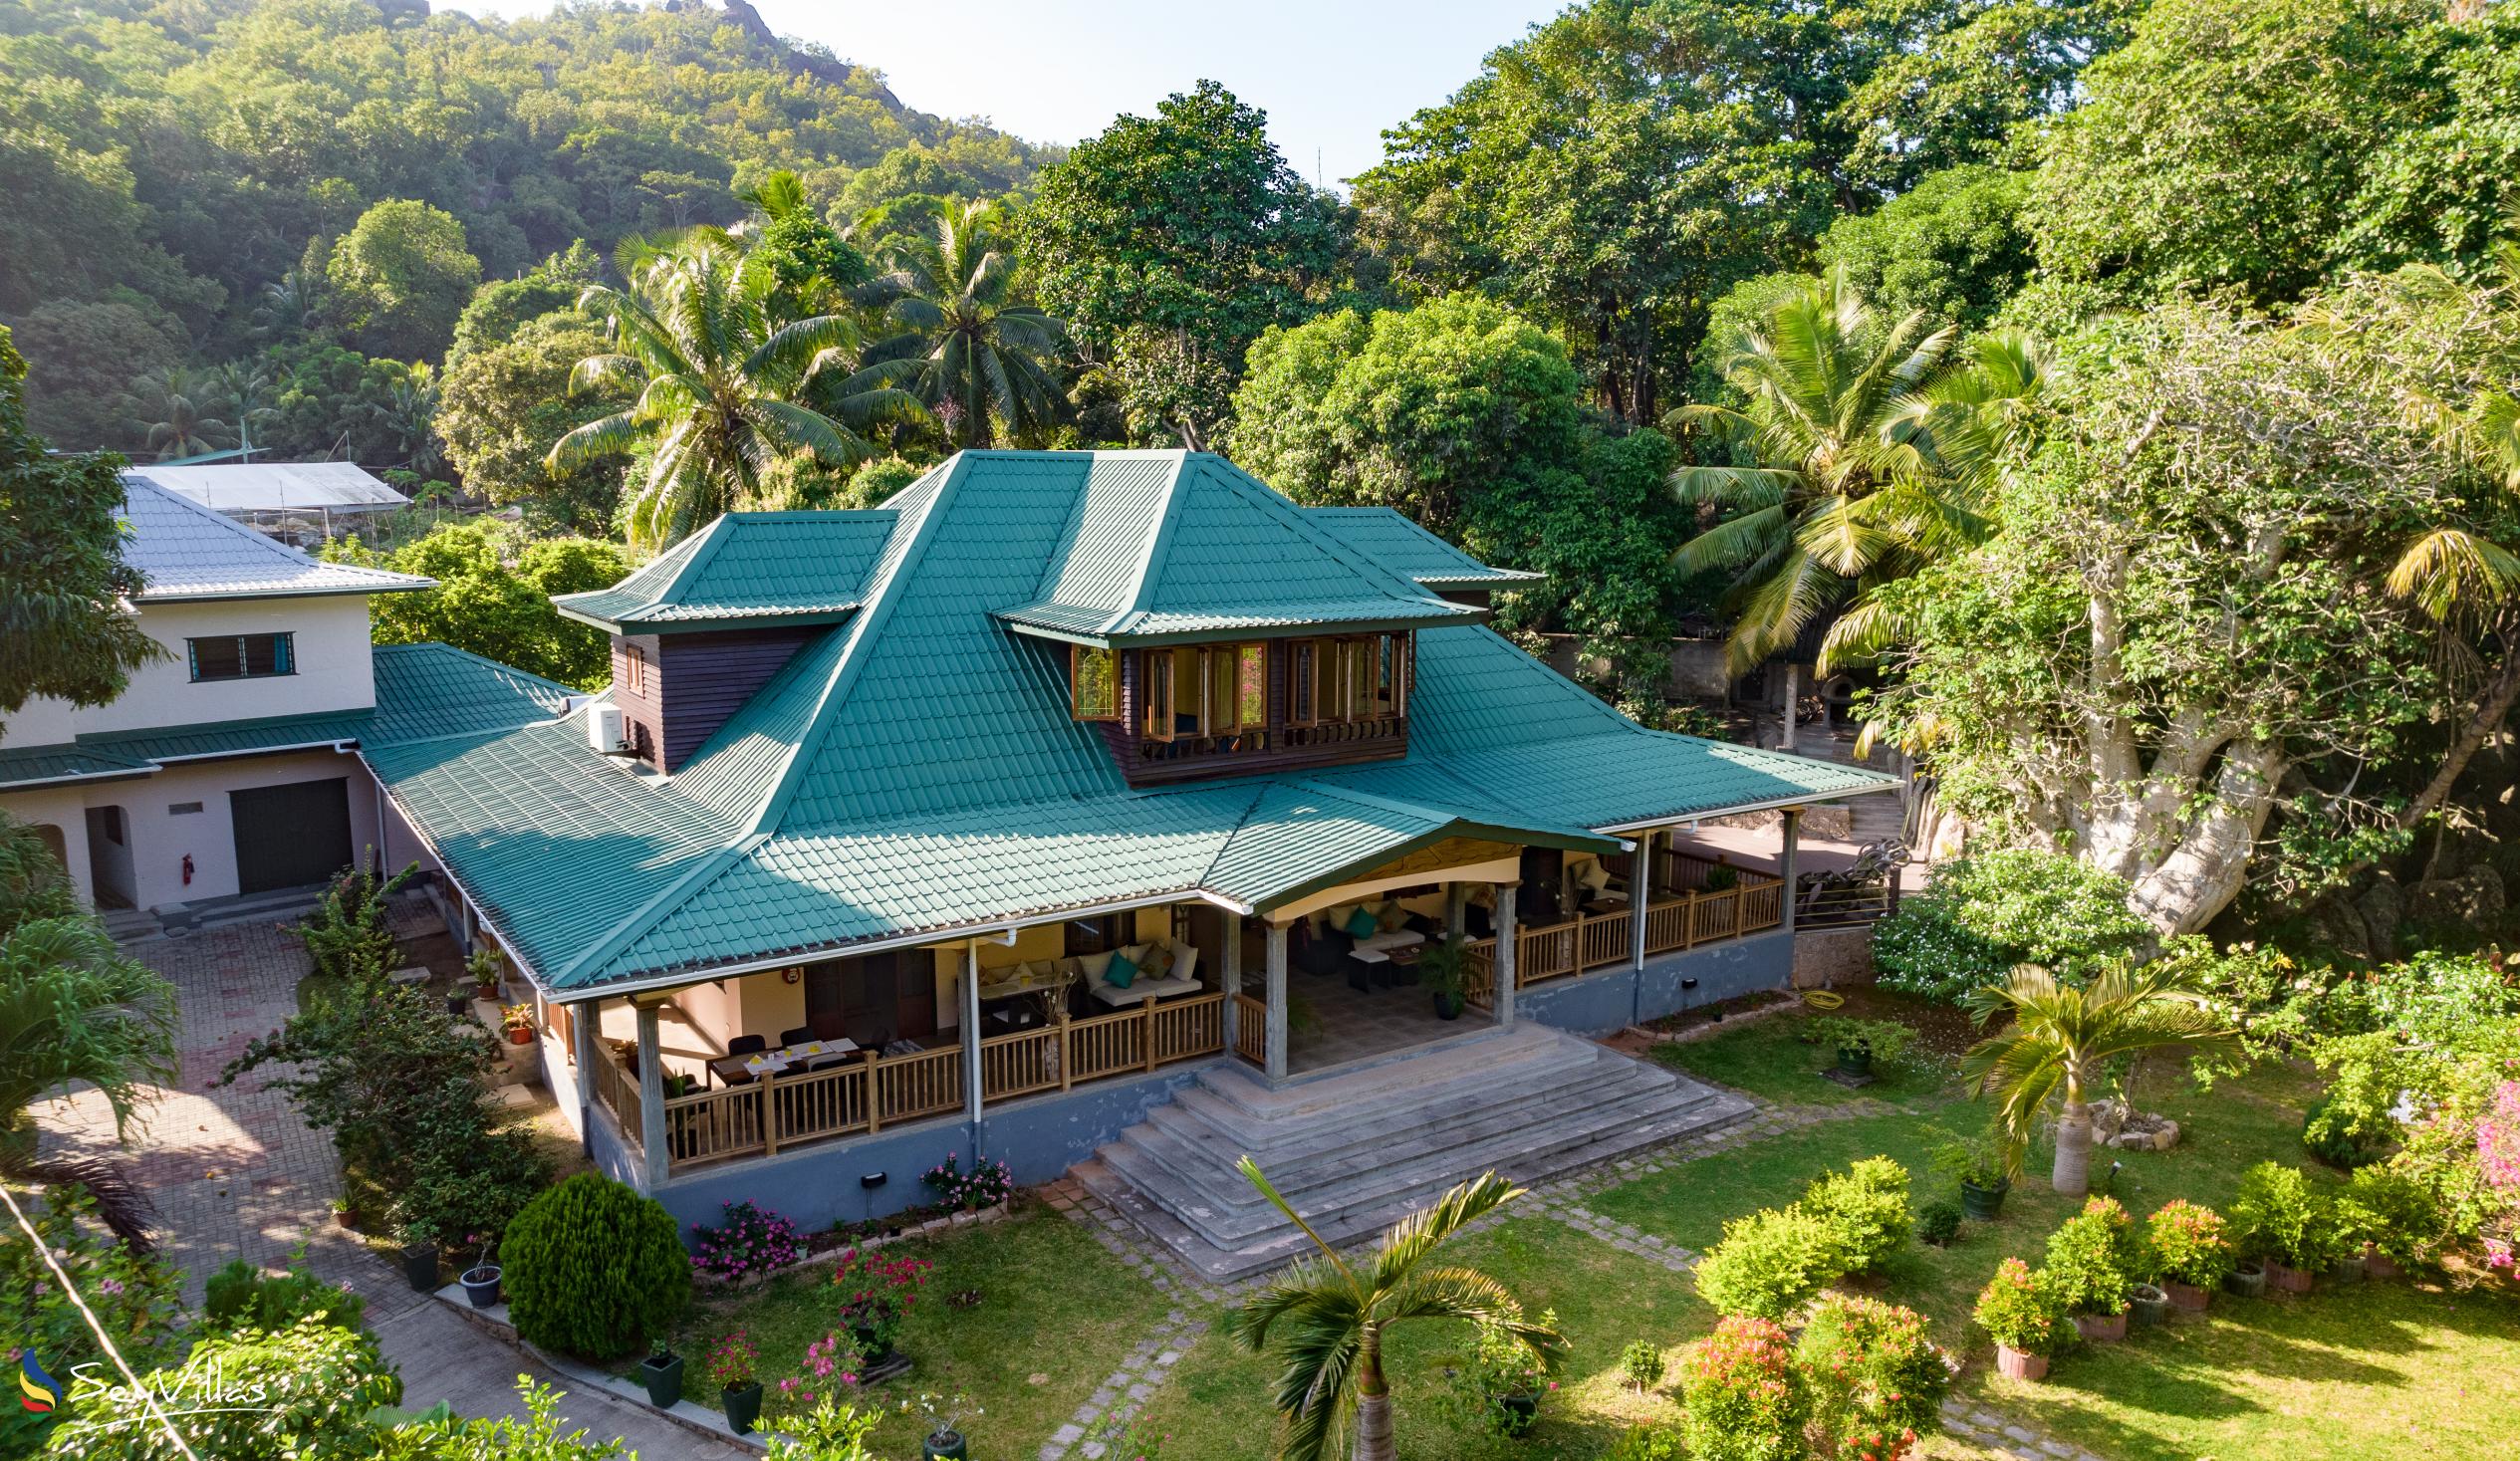 Photo 2: Pension Michel - Villa Roche Bois - Outdoor area - La Digue (Seychelles)